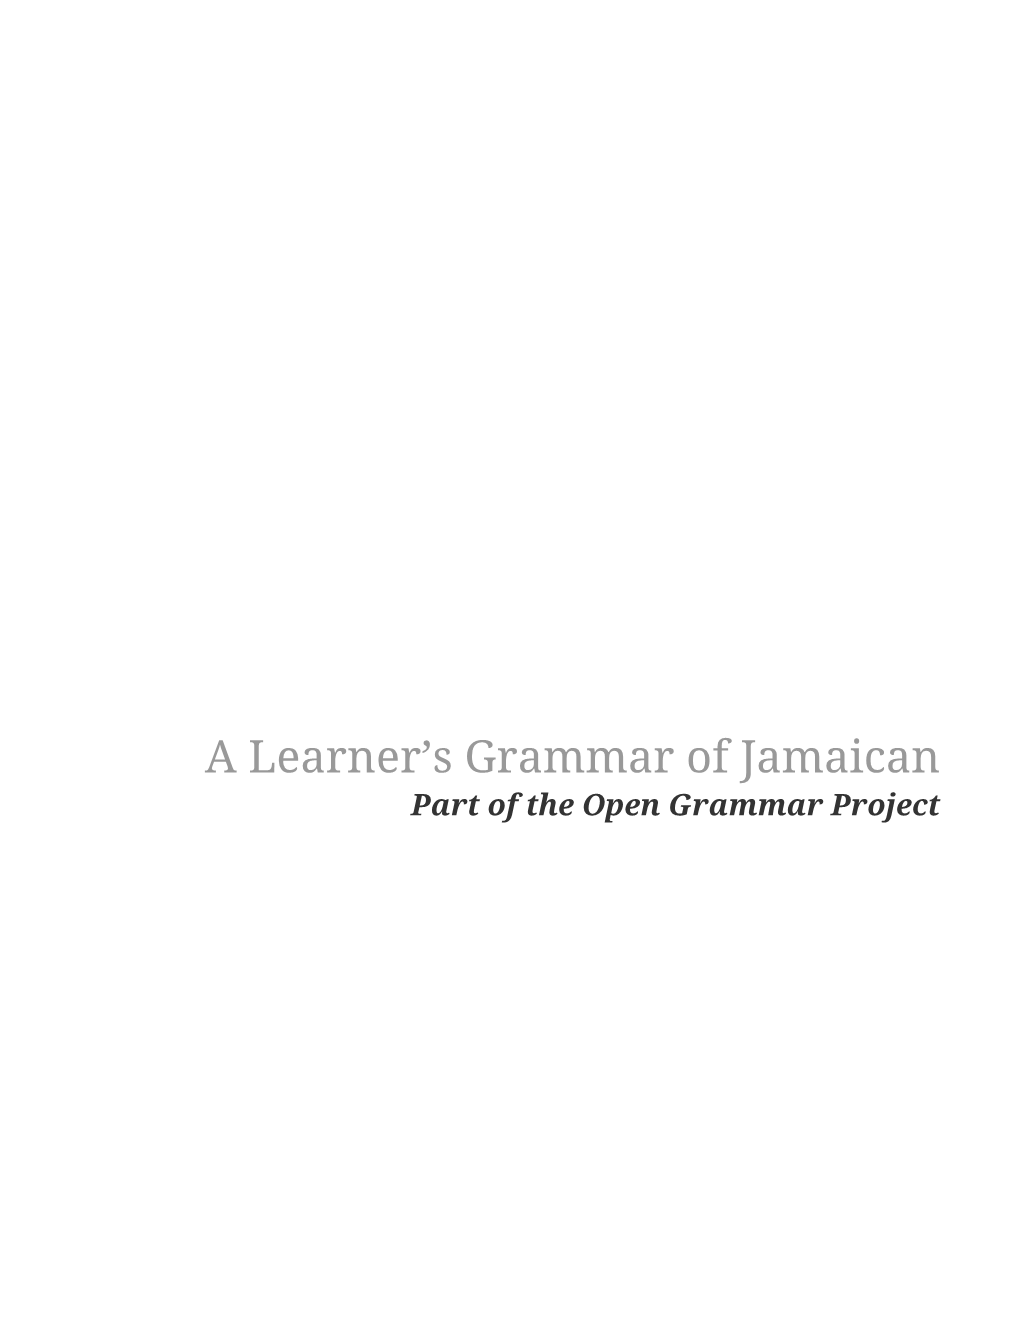 A Learner's Grammar of Jamaican